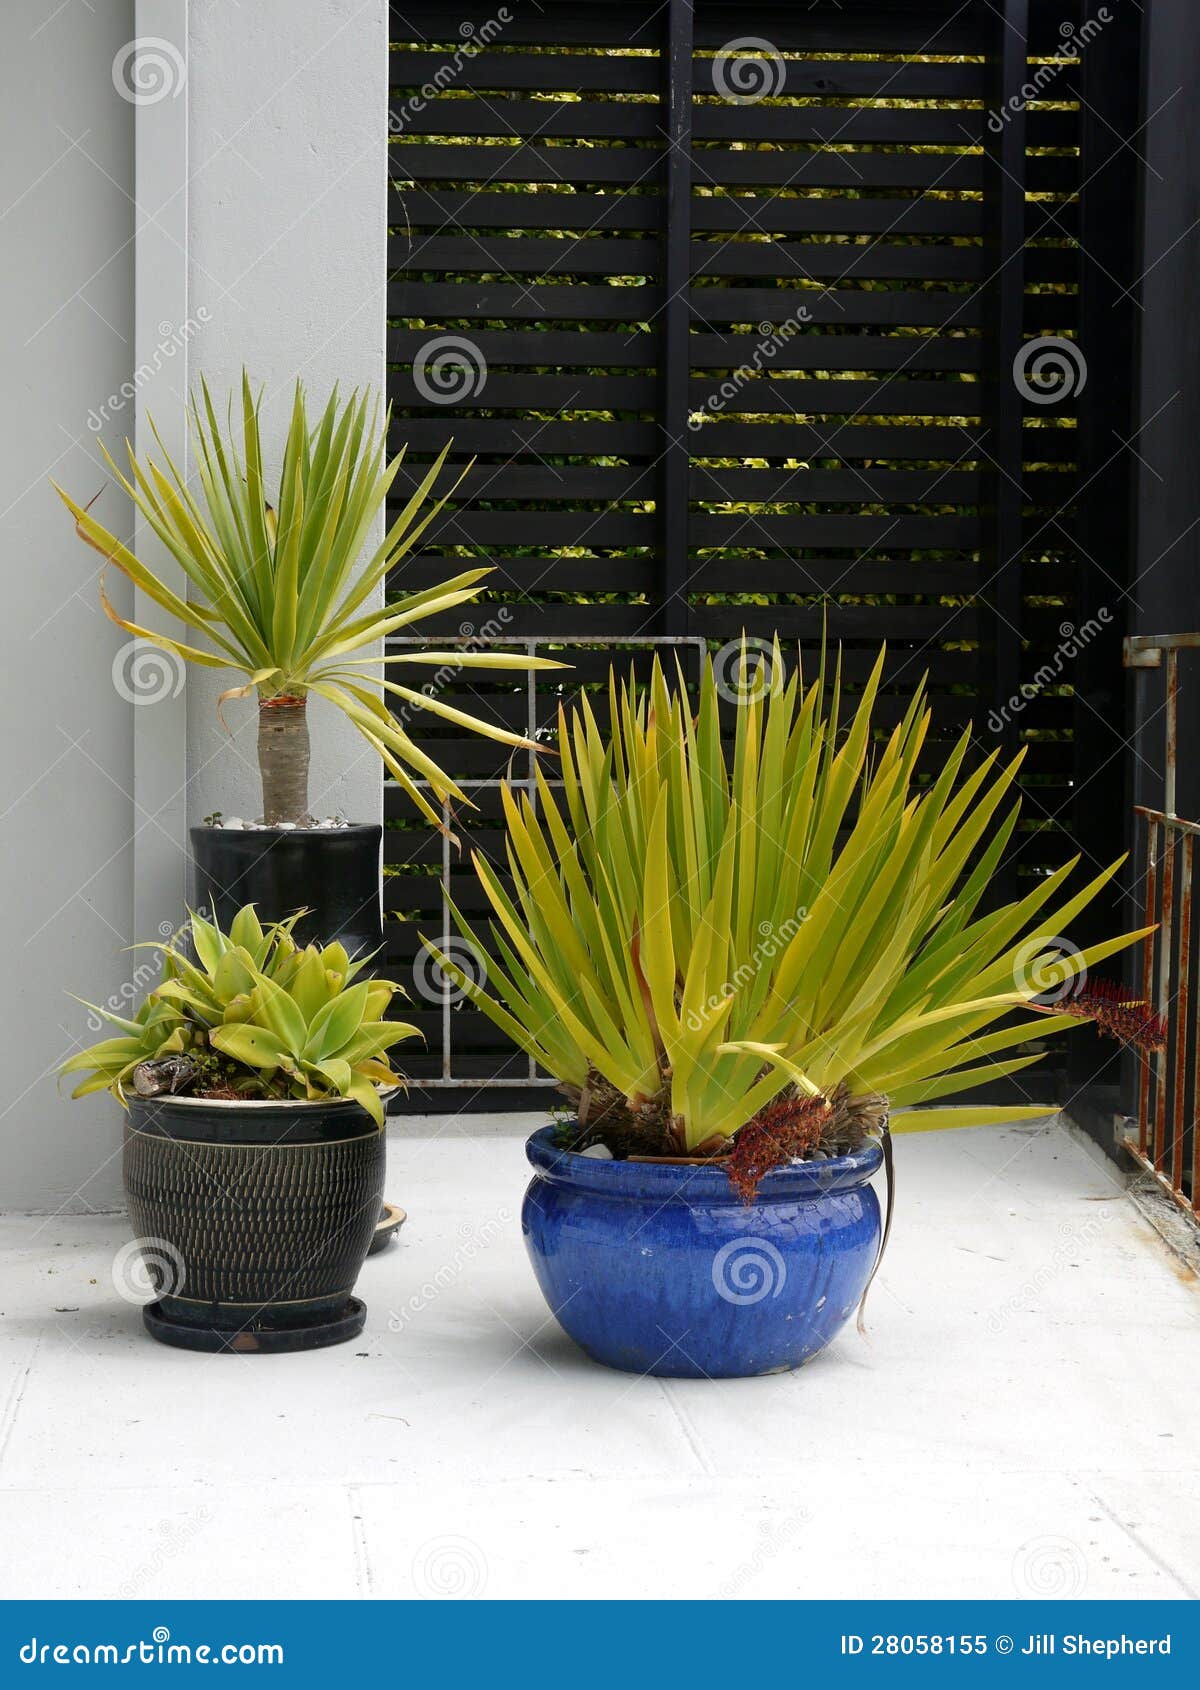 modernist garden: subtropical potted plants